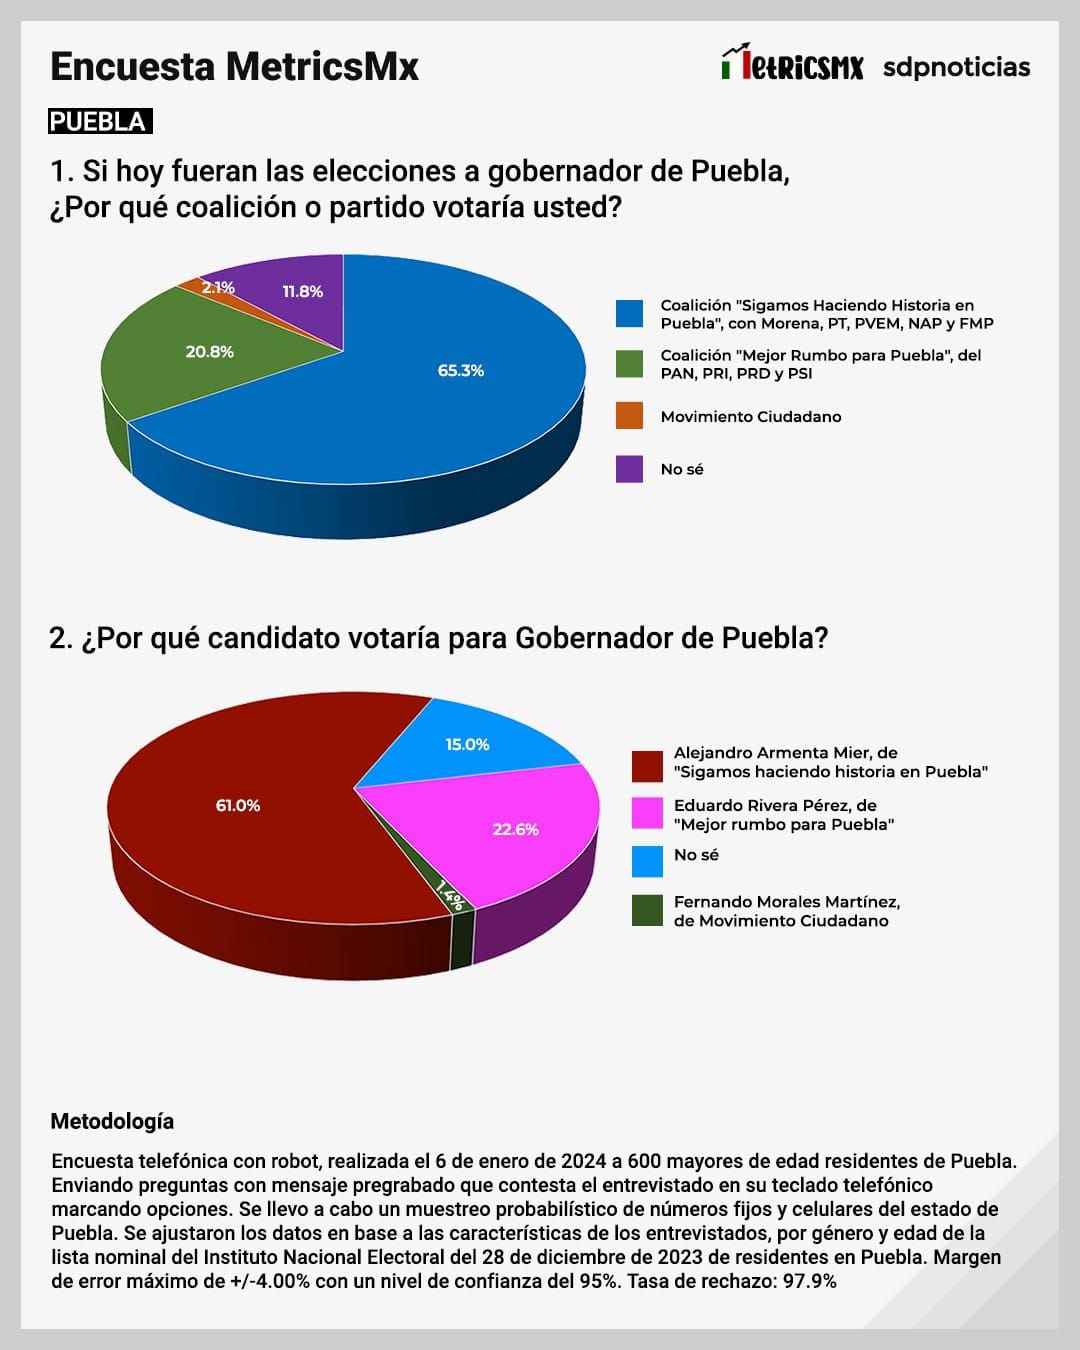 Alejandro Armenta arrasa en Puebla, señala encuesta MetricsMx